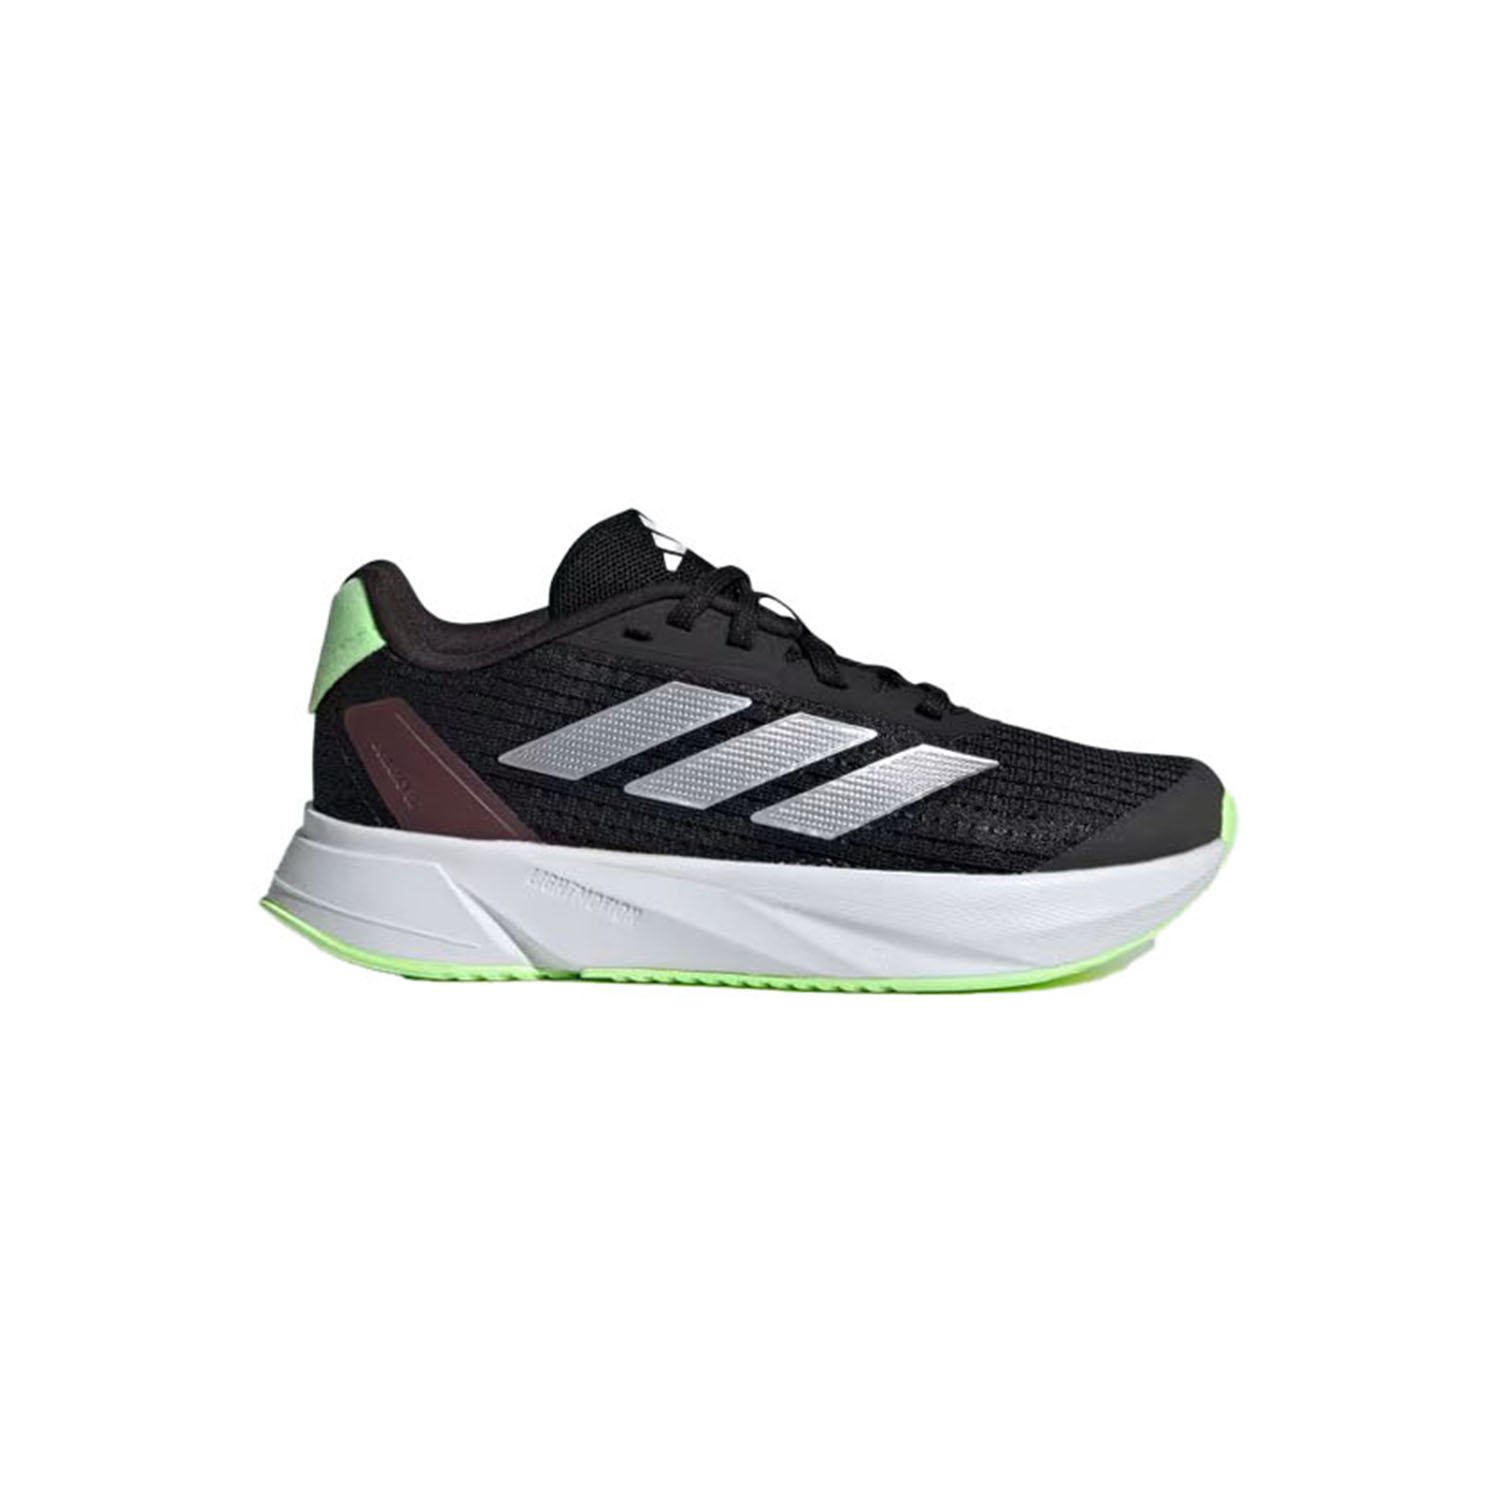 Adidas Duramo SL Çocuk Koşu Ayakkabısı - Siyah - 1